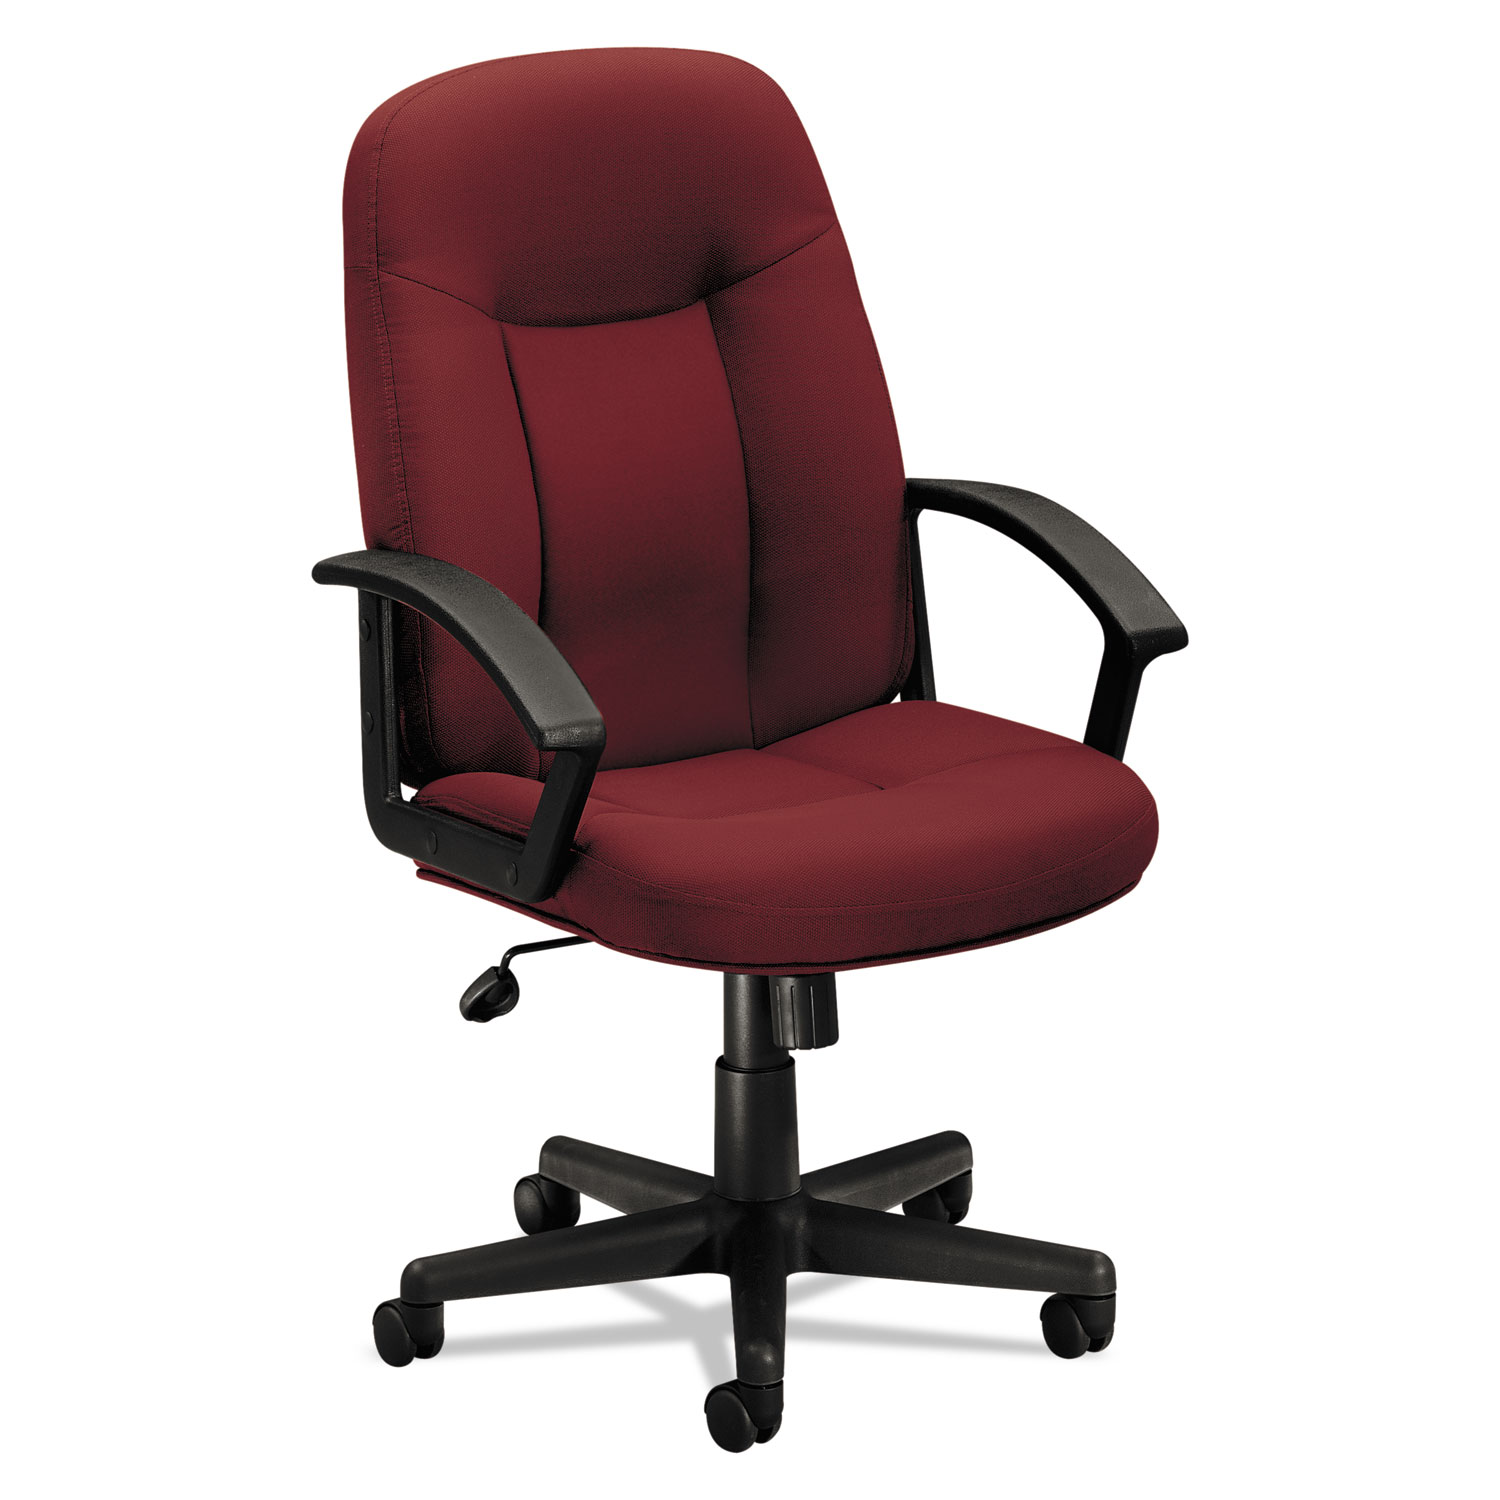  HON HVL601.VA62 HVL601 Series Executive High-Back Chair, Supports up to 250 lbs., Burgundy Seat/Burgundy Back, Black Base (BSXVL601VA62) 